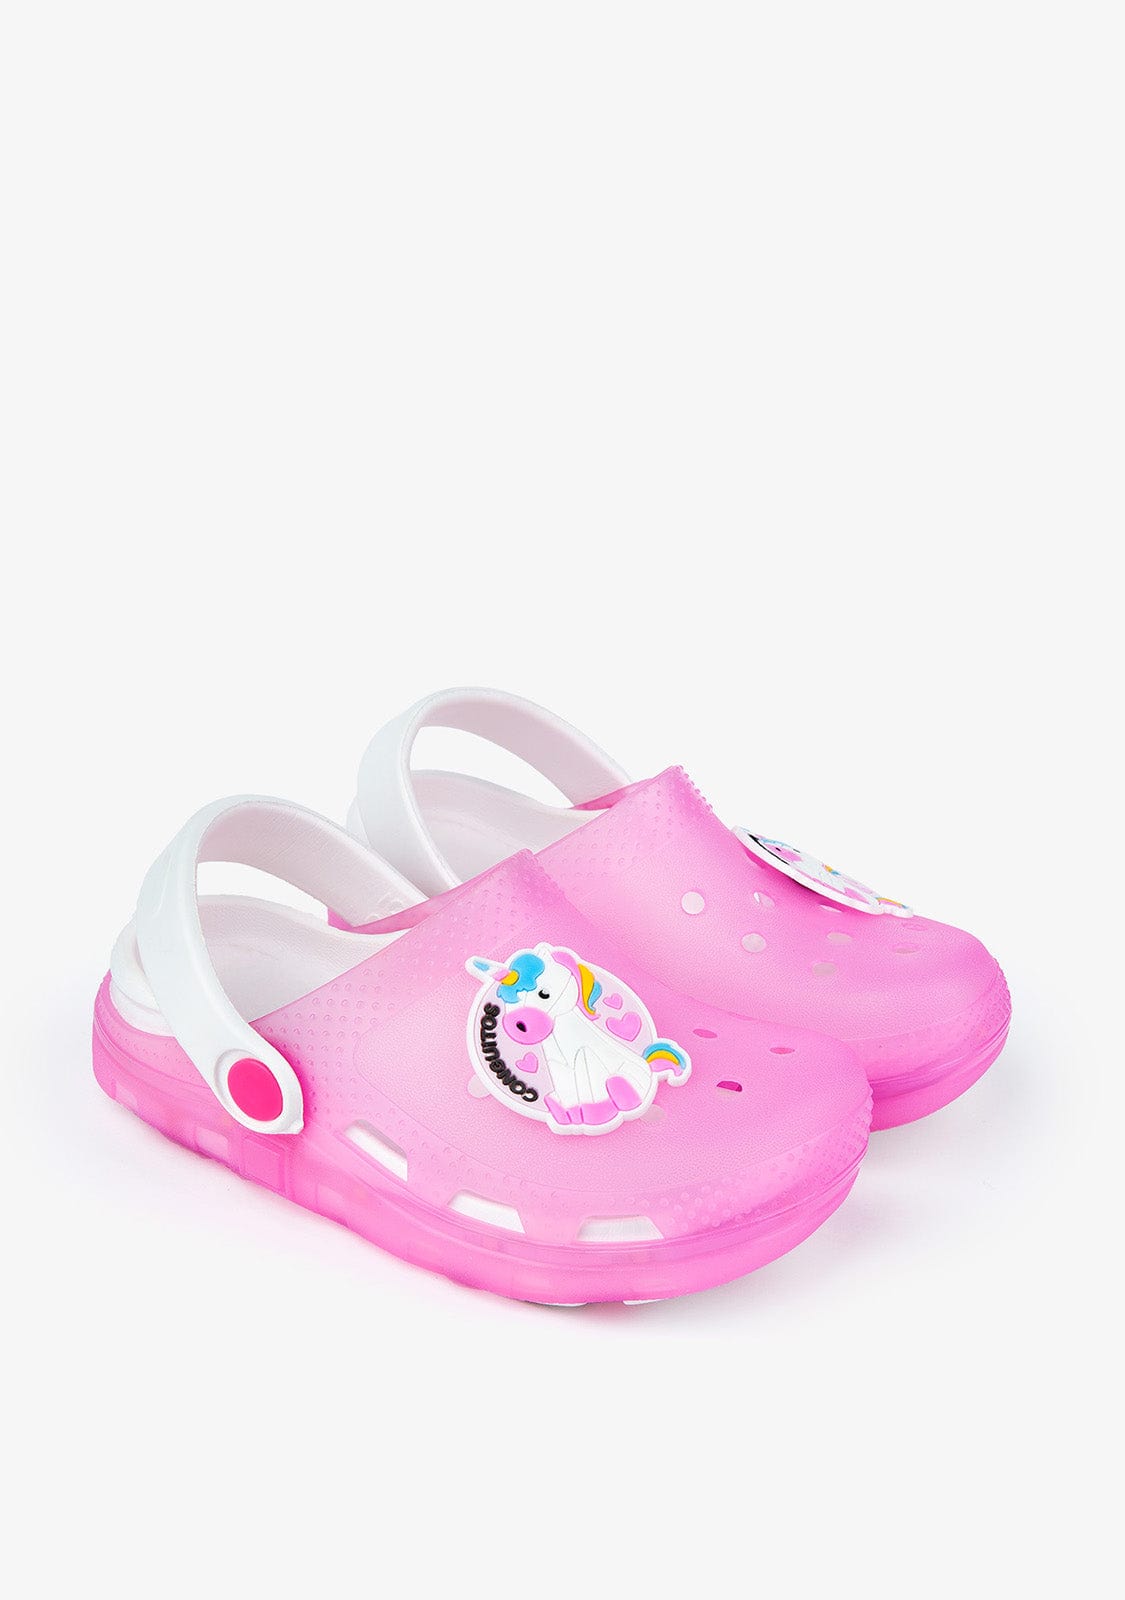 CONGUITOS Shoes Girl's Pink Unicorn Clogs